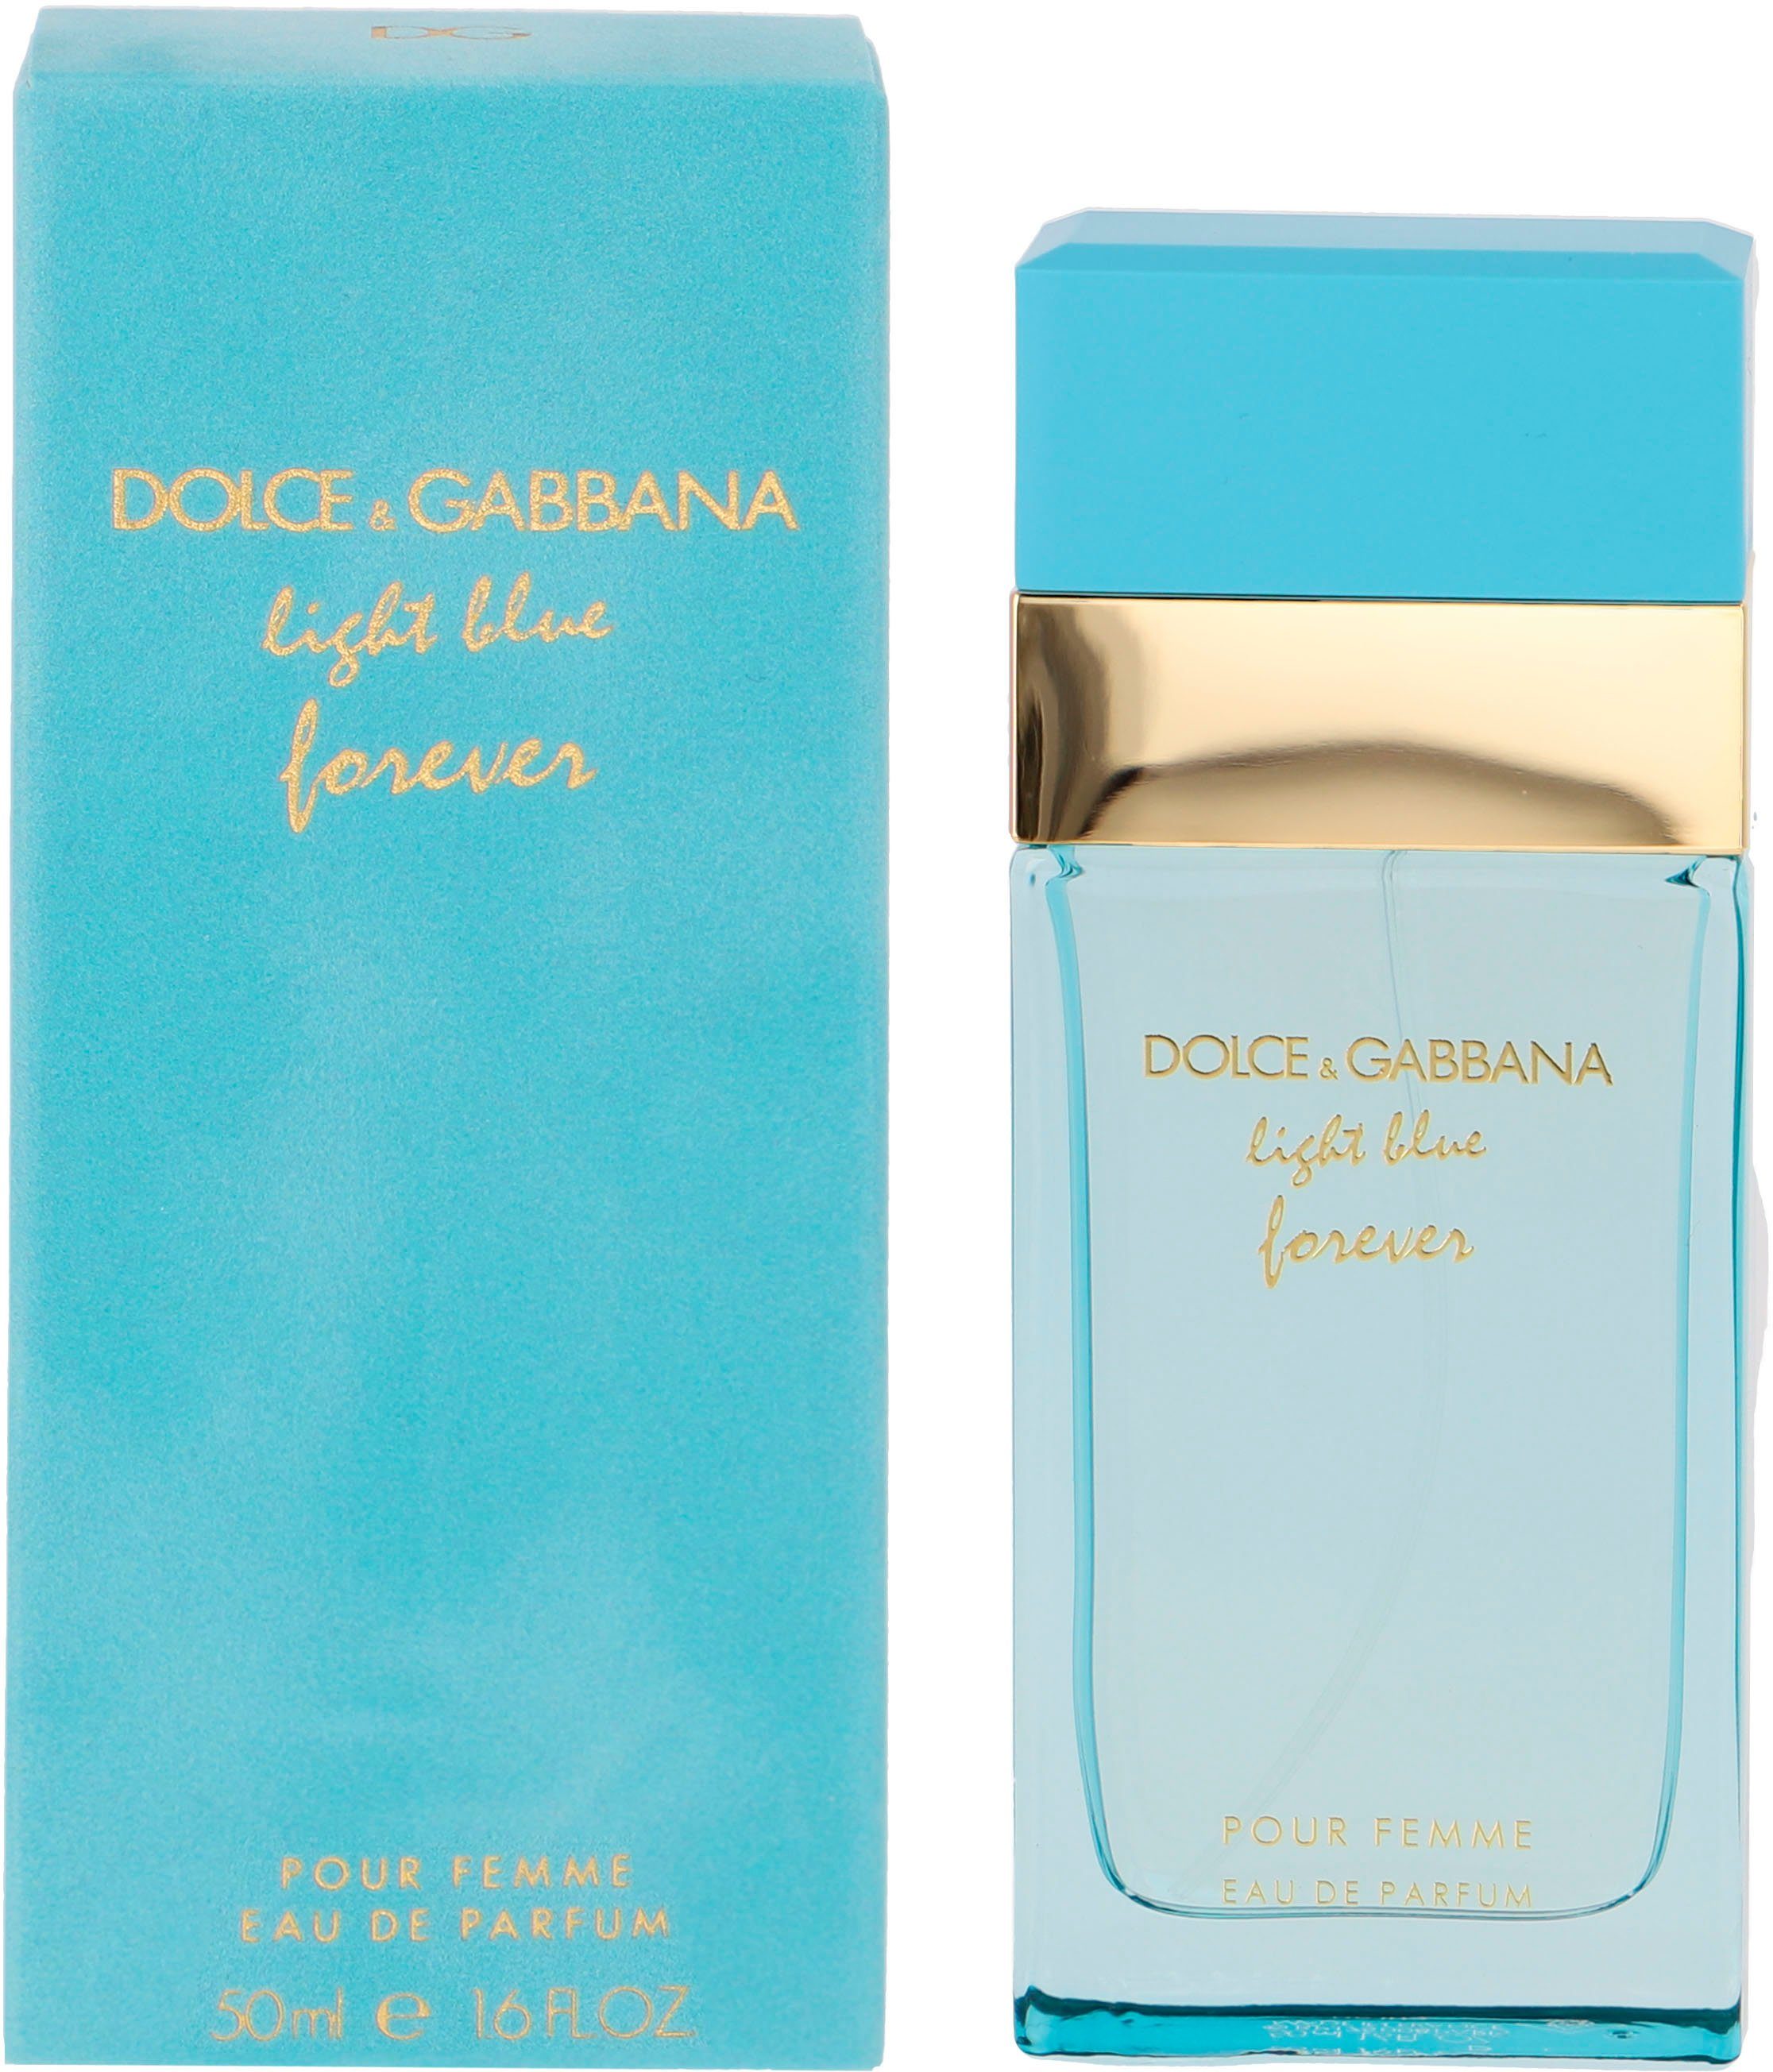 DOLCE & GABBANA de Eau Blue Parfum Forever Light